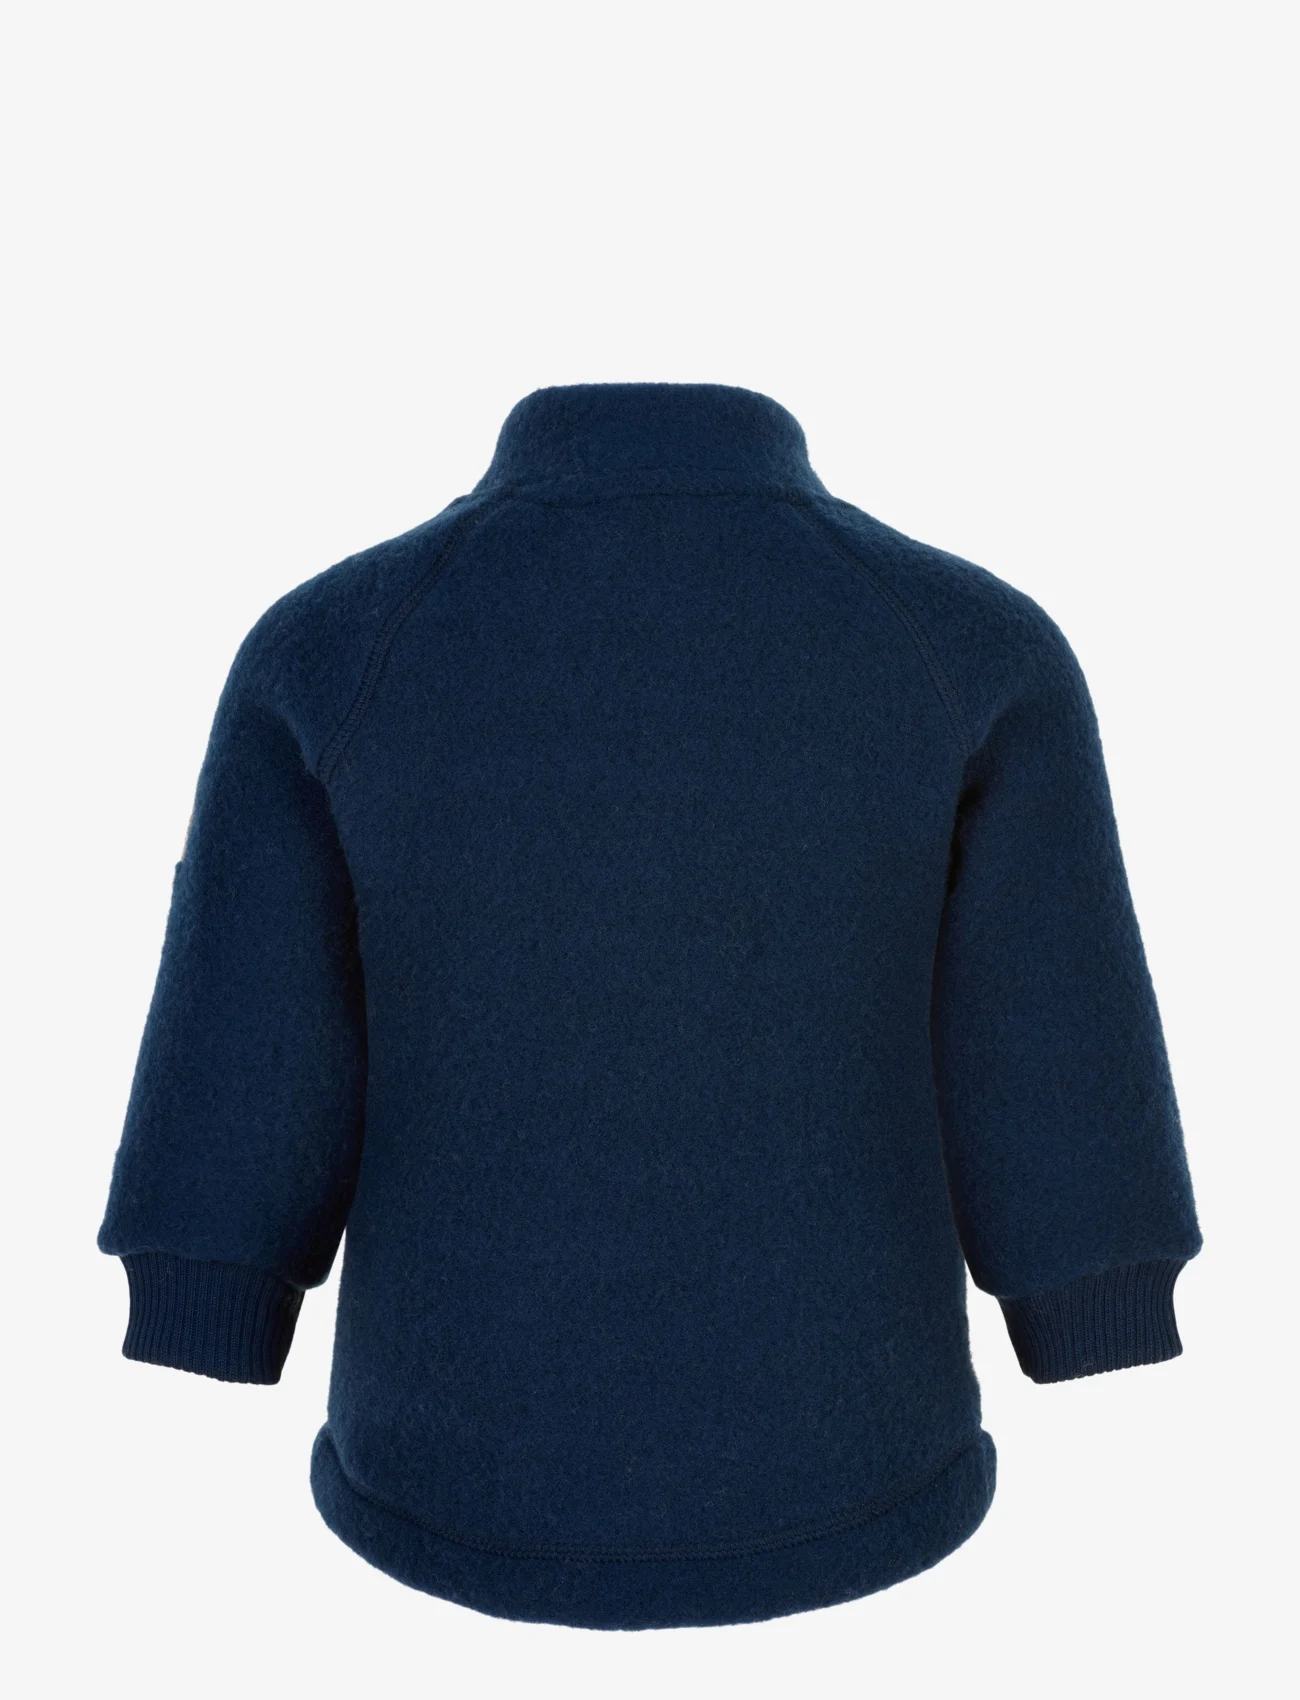 mikk-line - Wool Jacket - fleecetakit - blue nights - 1